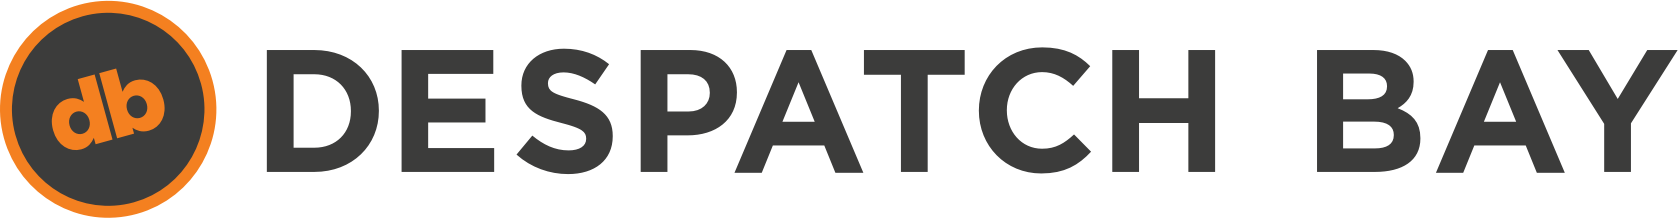 Despatch bay logotype